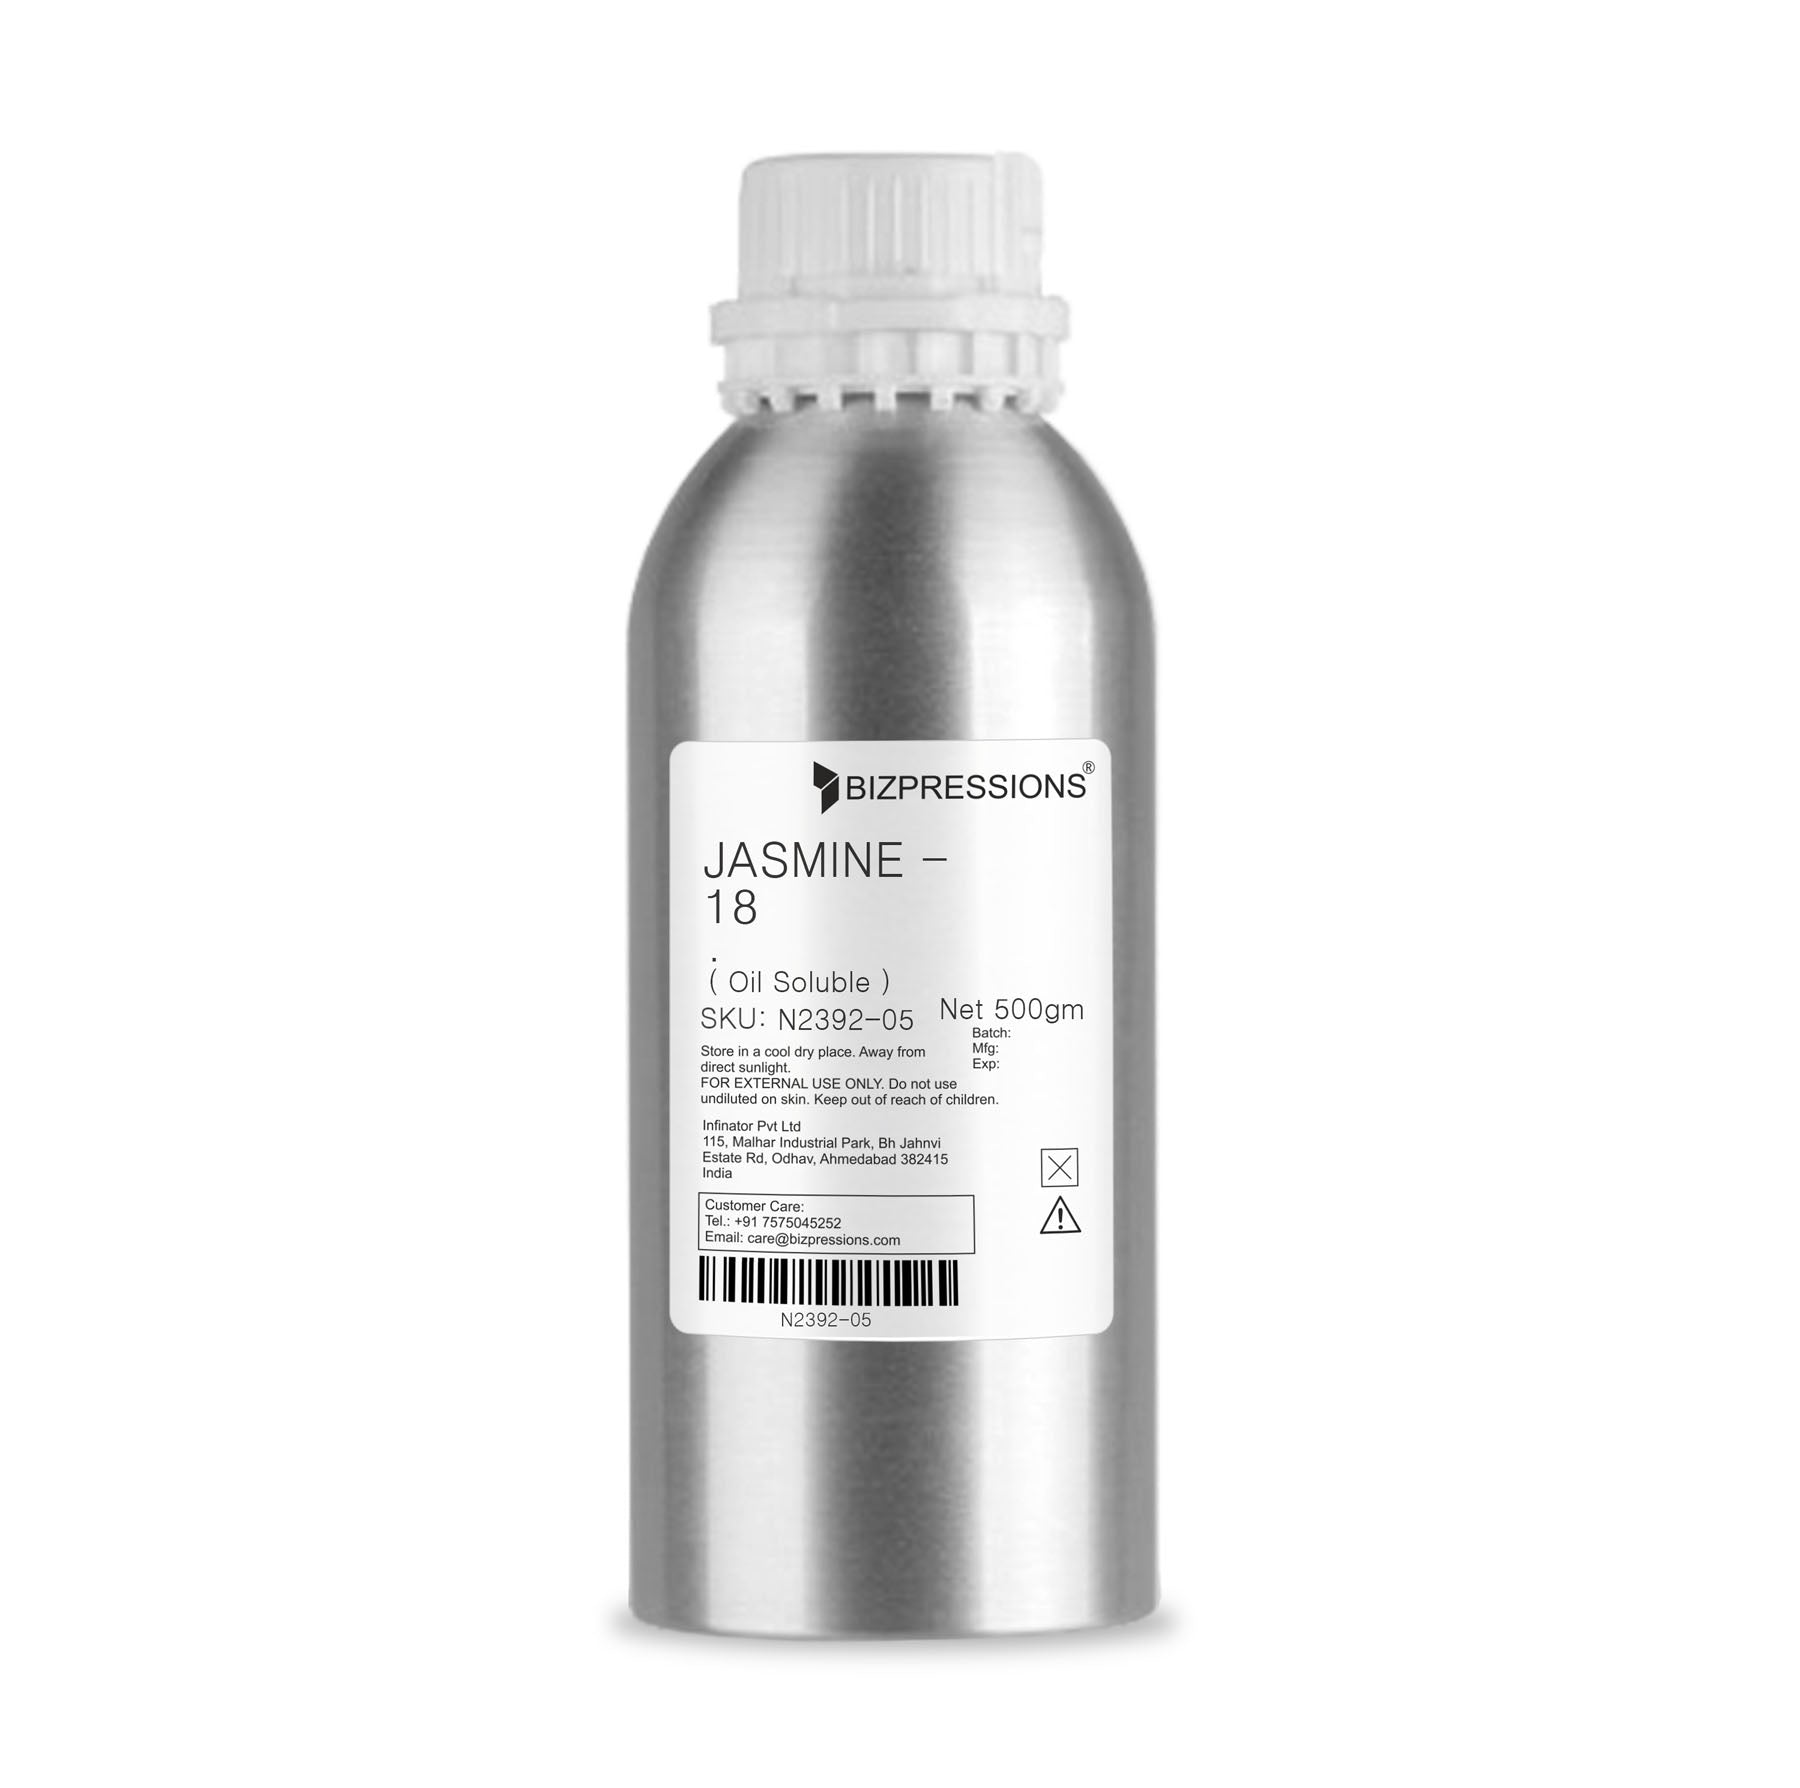 JASMINE - 18 - Fragrance ( Oil Soluble ) - 500 gm